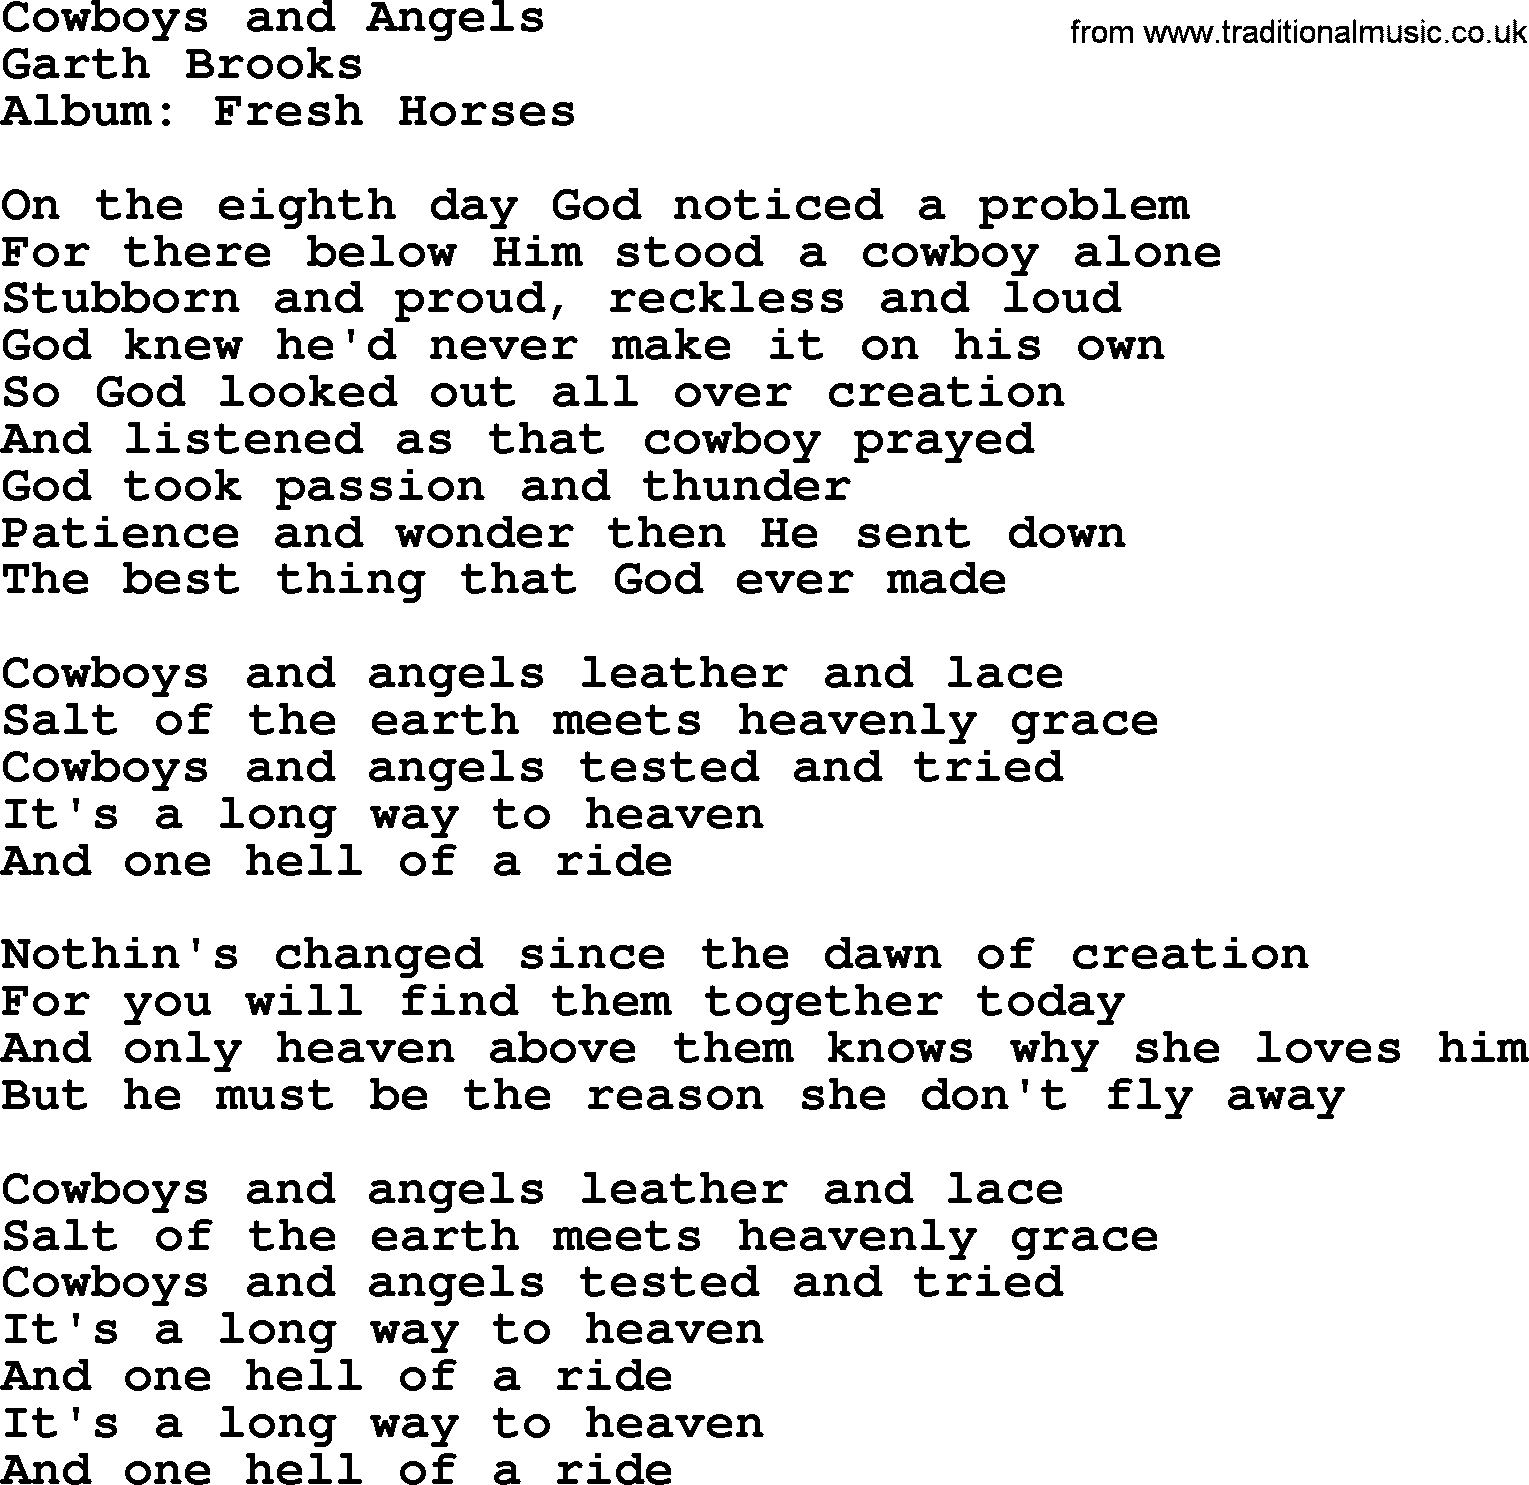 Garth Brooks song: Cowboys And Angels, lyrics